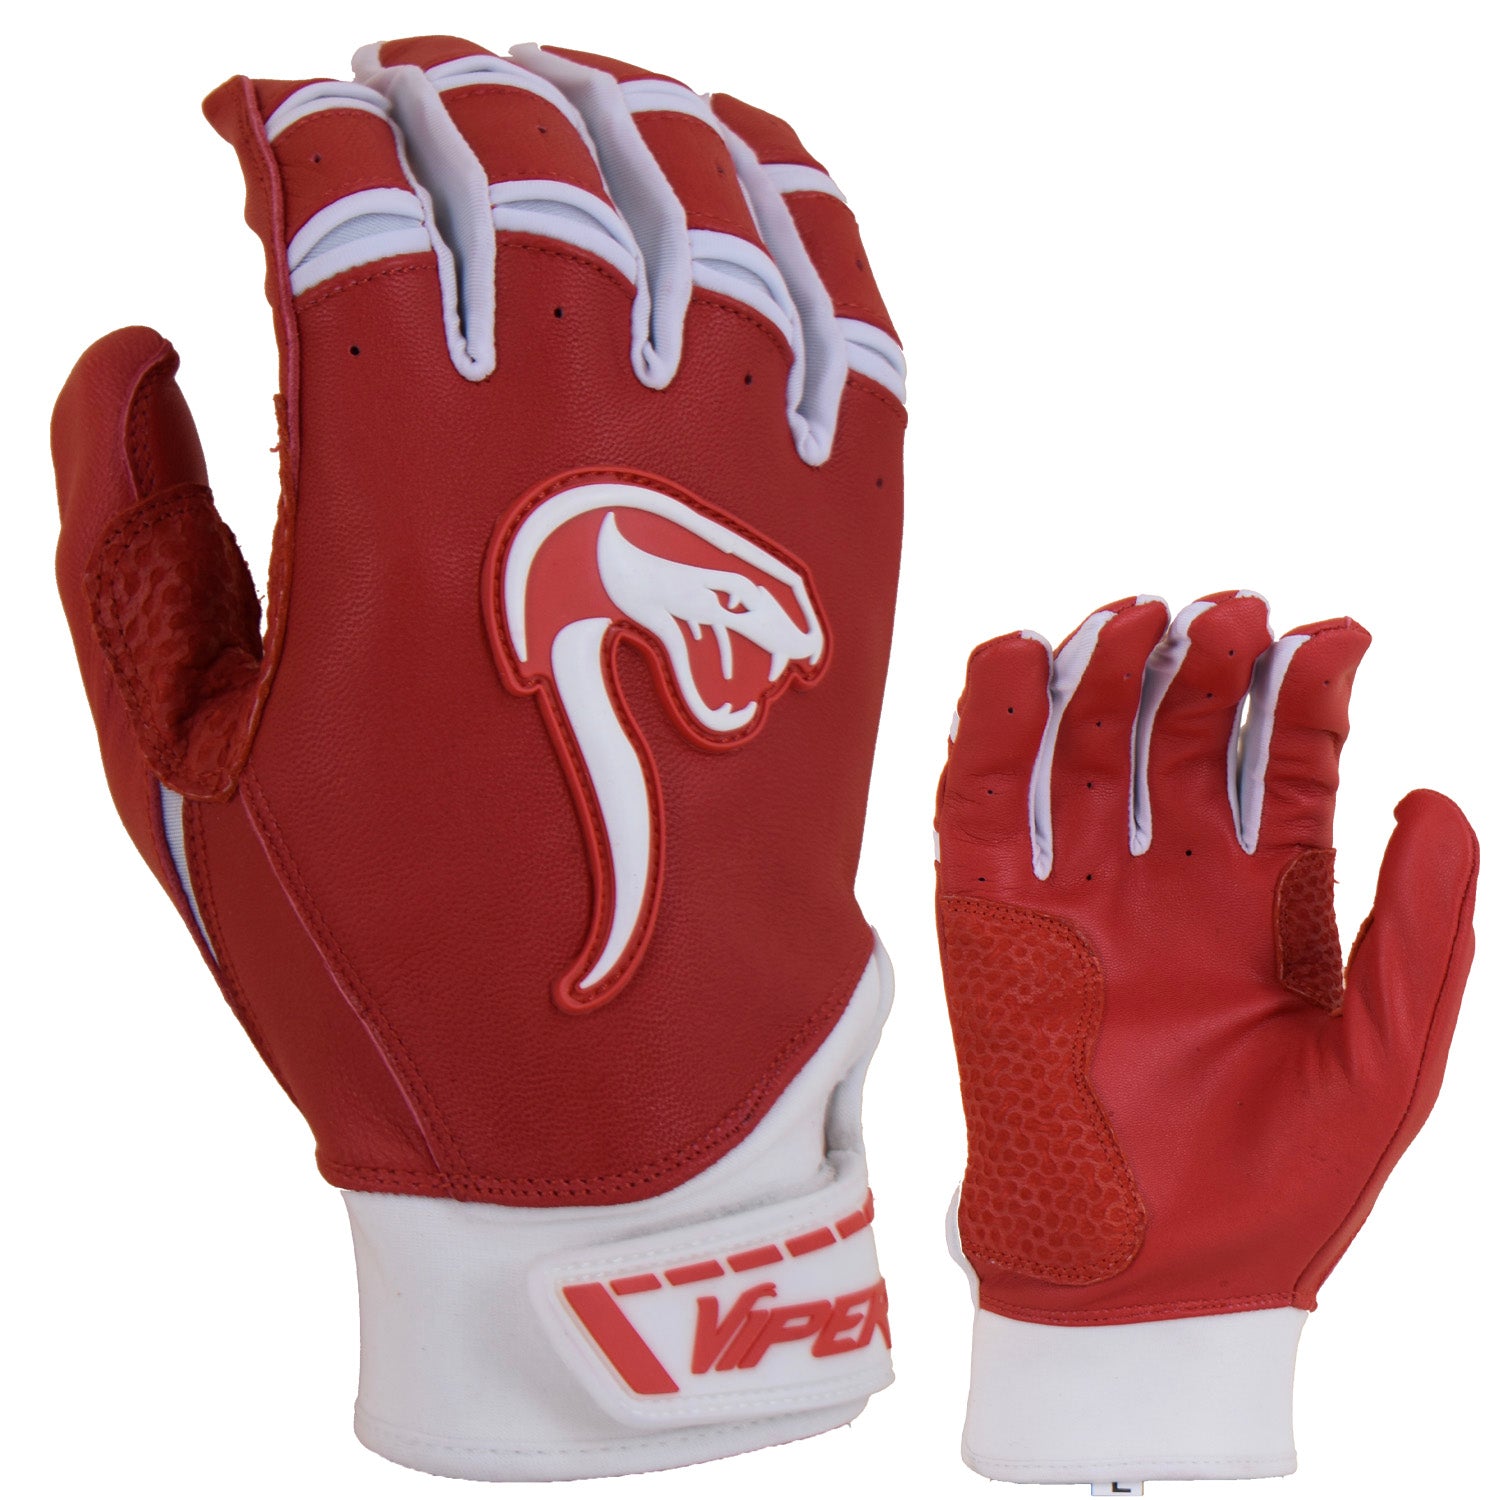 Viper Grindstone Short Cuff Batting Glove - Red/White